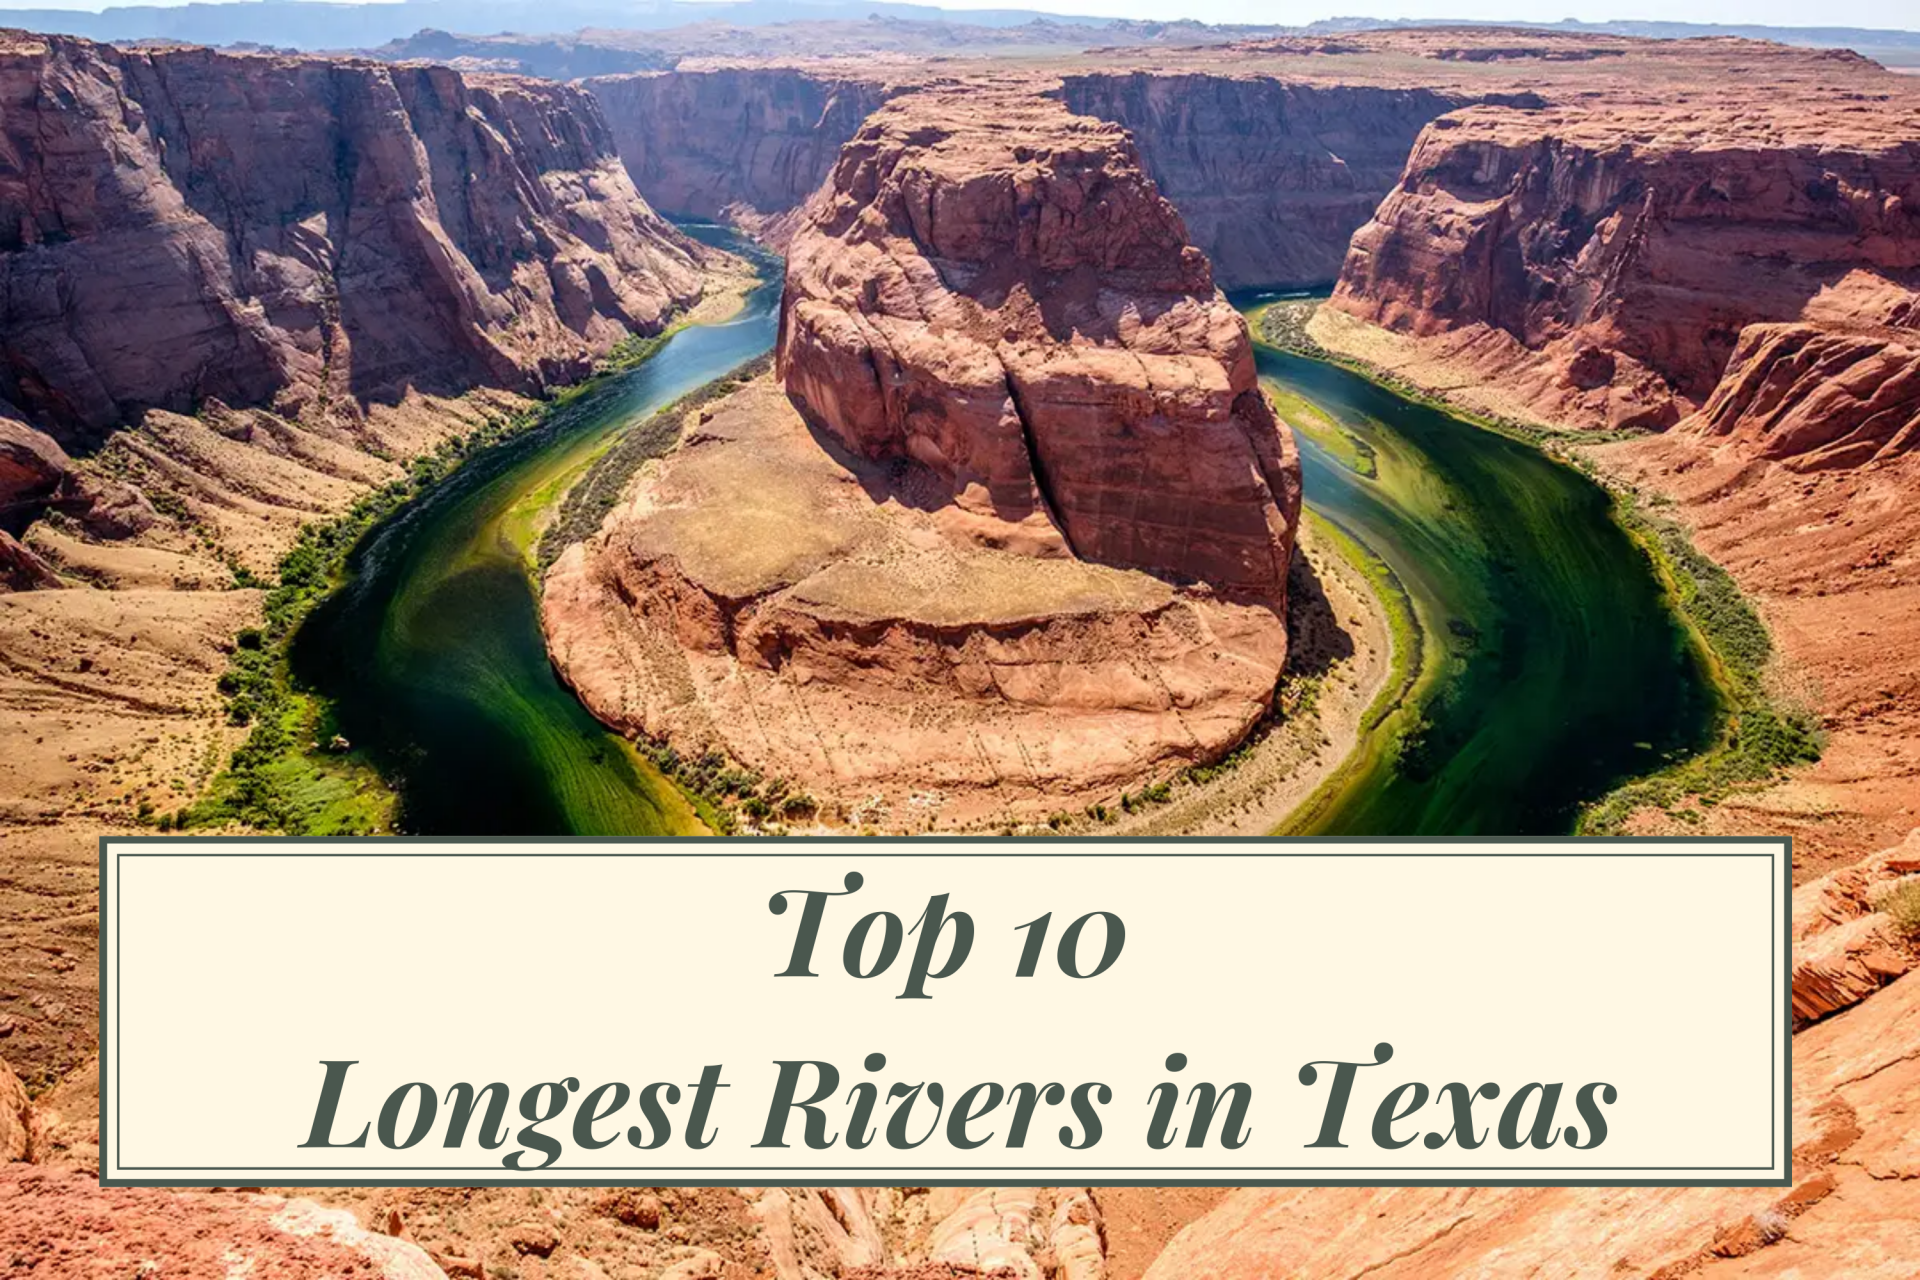 Rivers of Texas. Photo: KnowInsiders